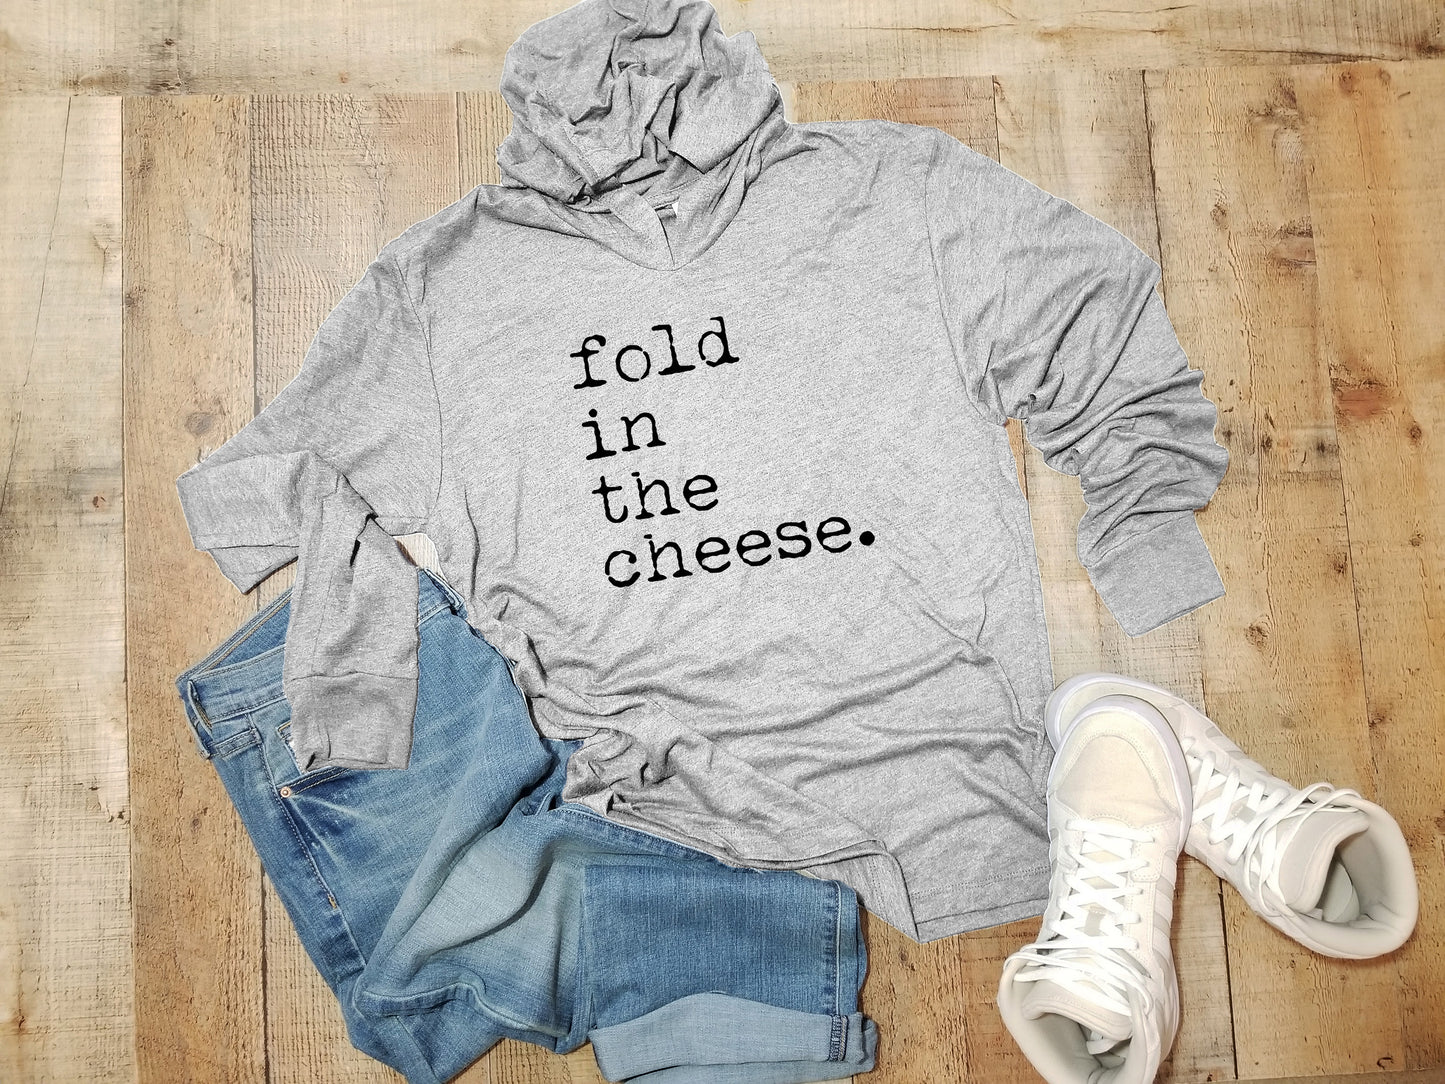 Fold In The Cheese (Schitt's Creek) - Unisex T-Shirt Hoodie - Heather Gray